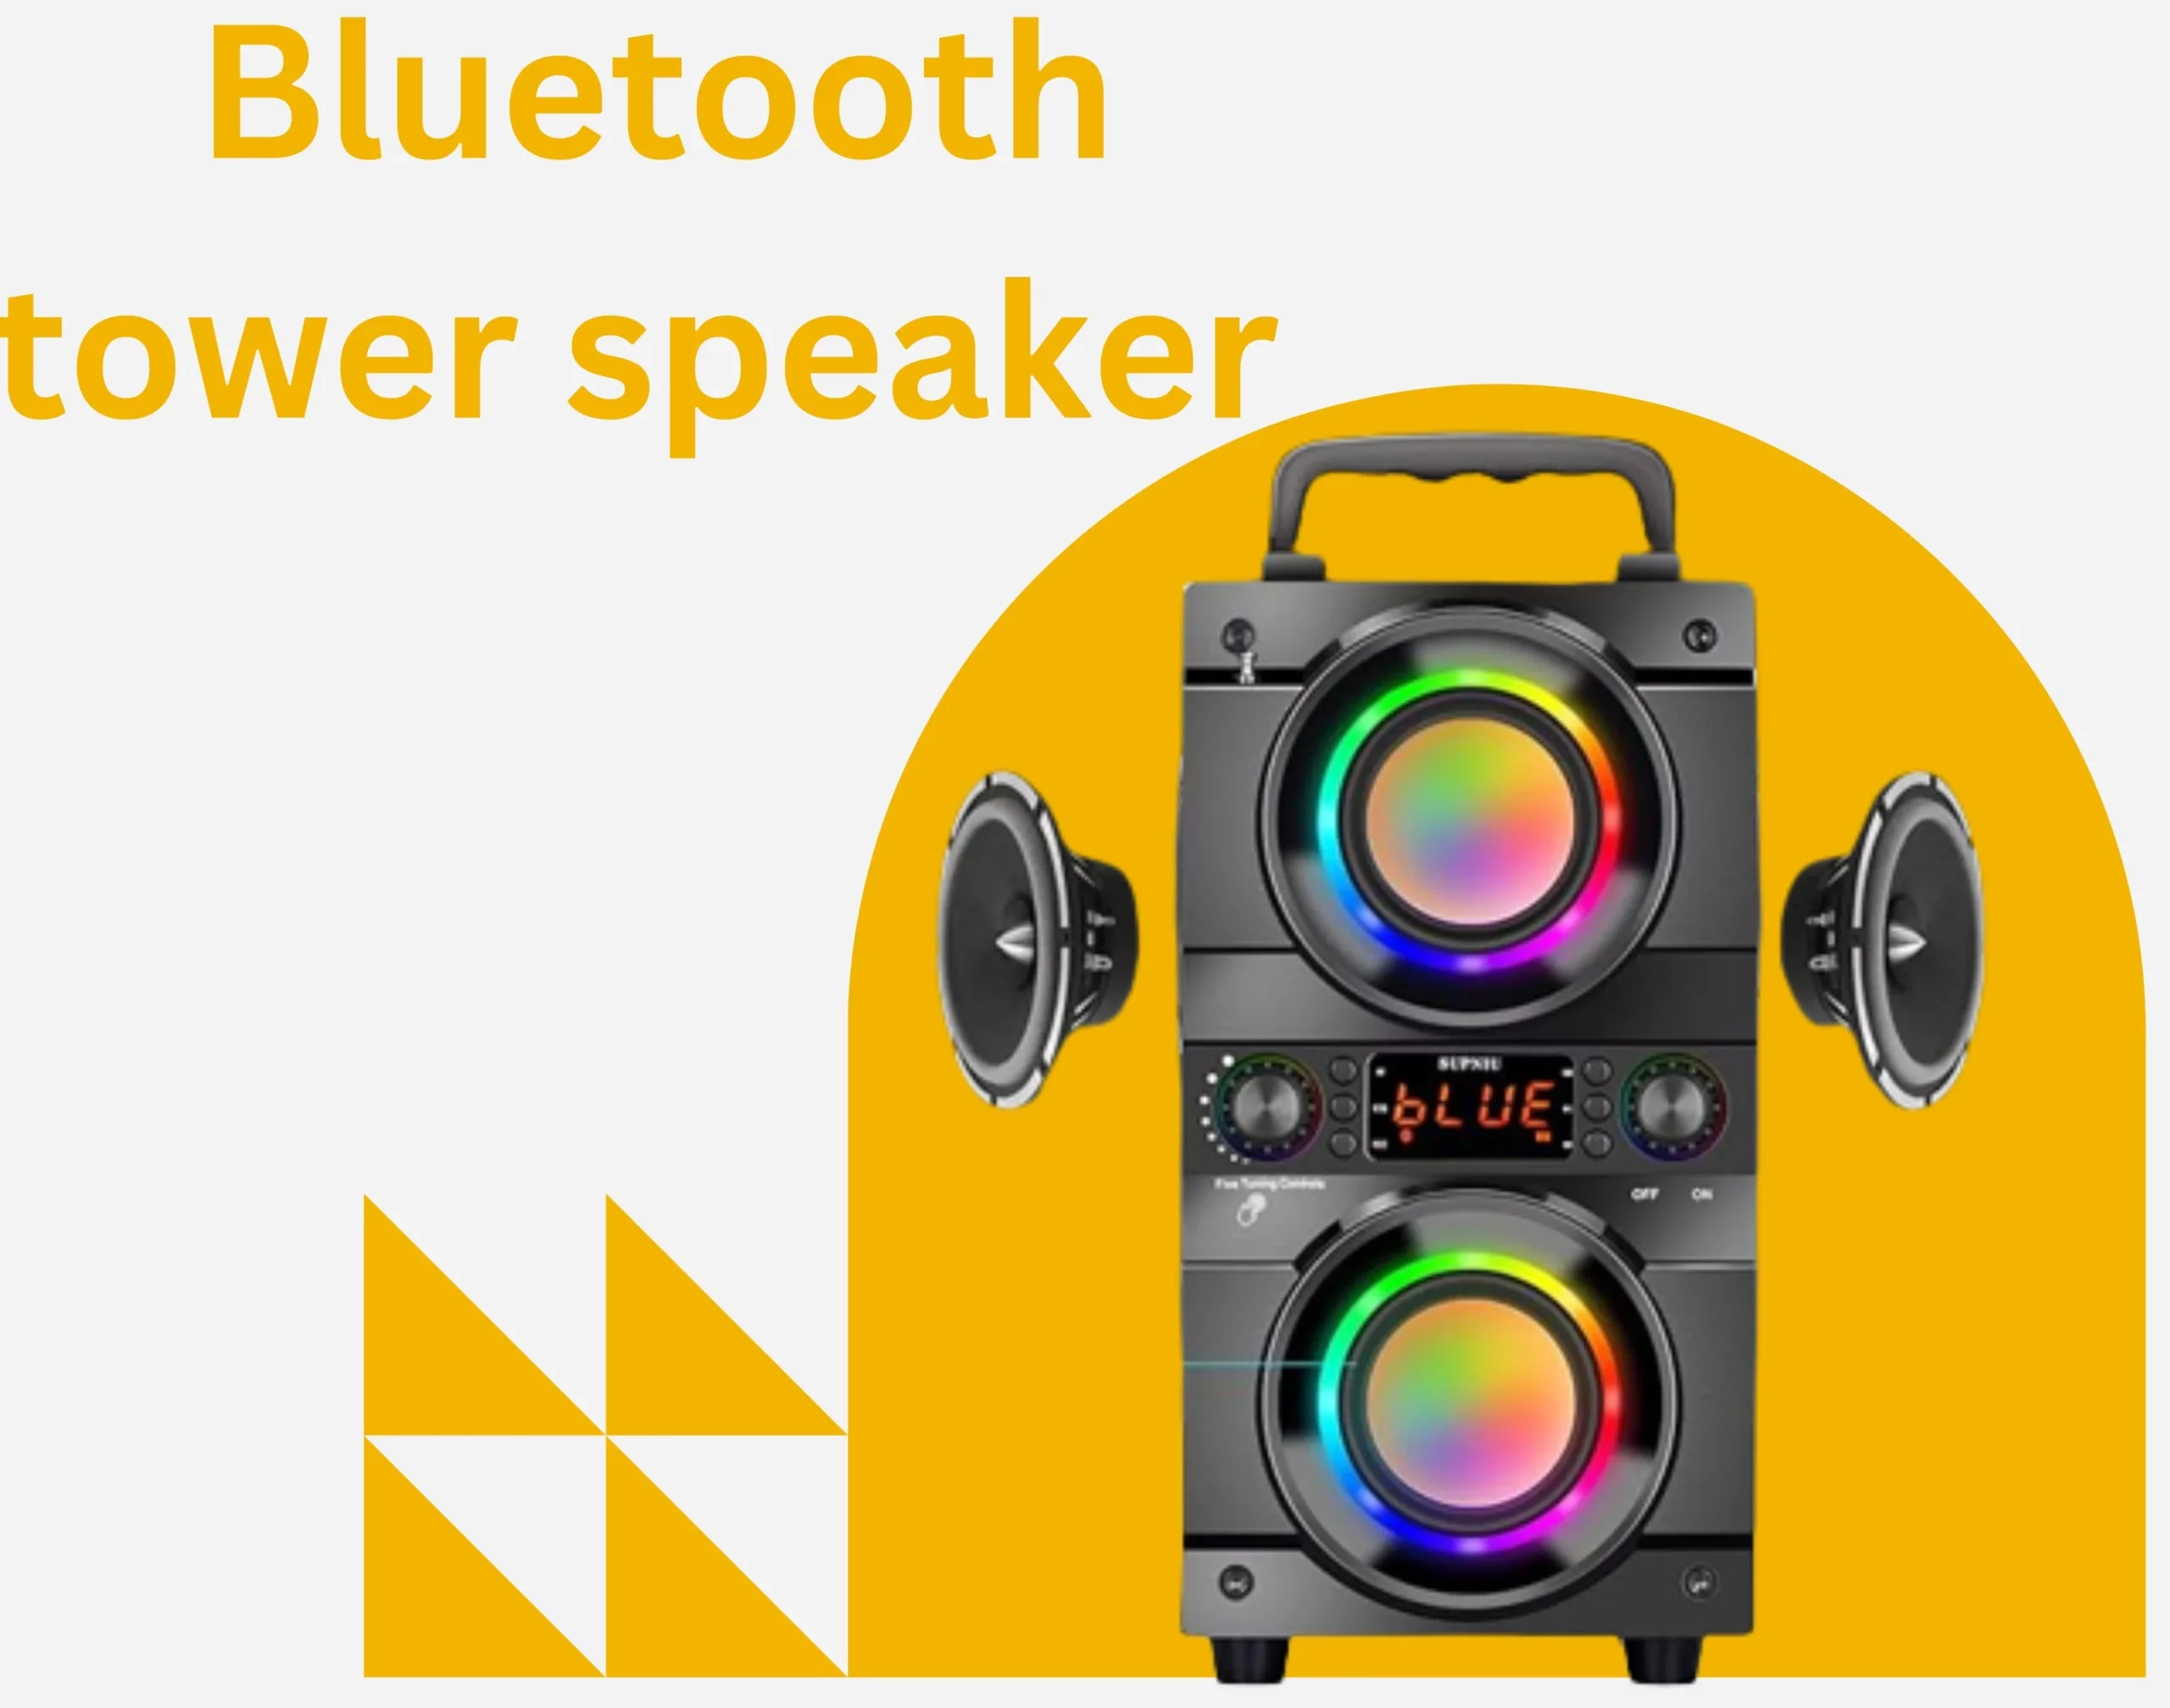 Bluetooth tower speaker